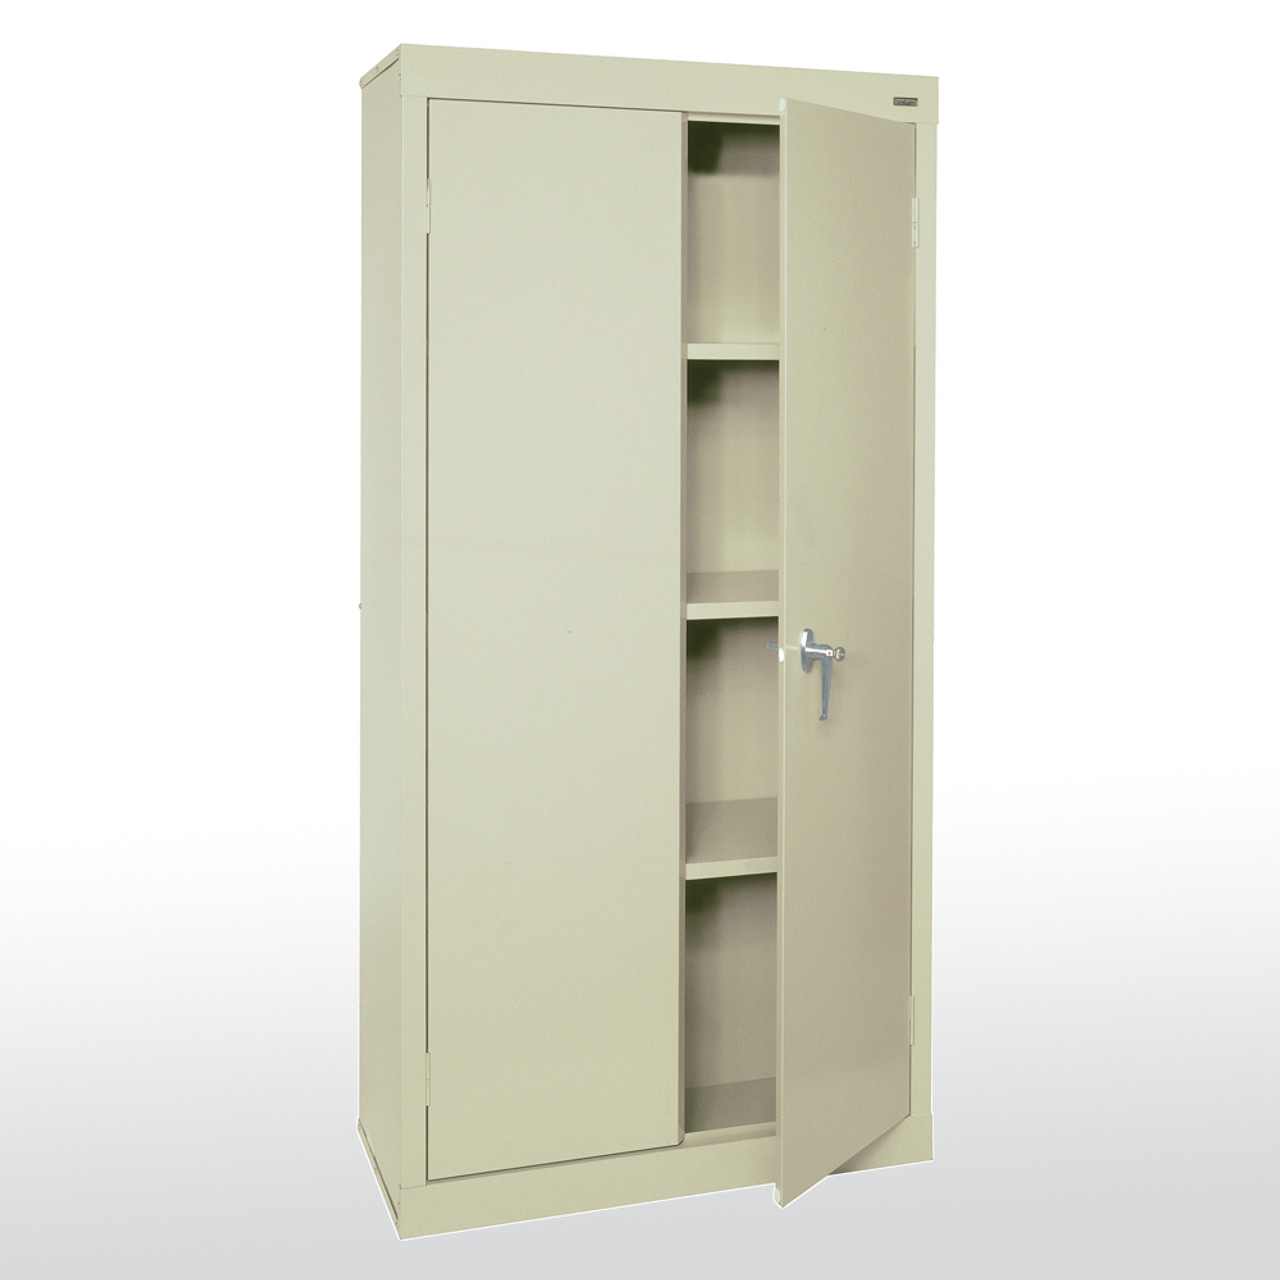 Sandusky Lee Vf31301872 Value Line Storage Cabinet 30 X 18 X 72